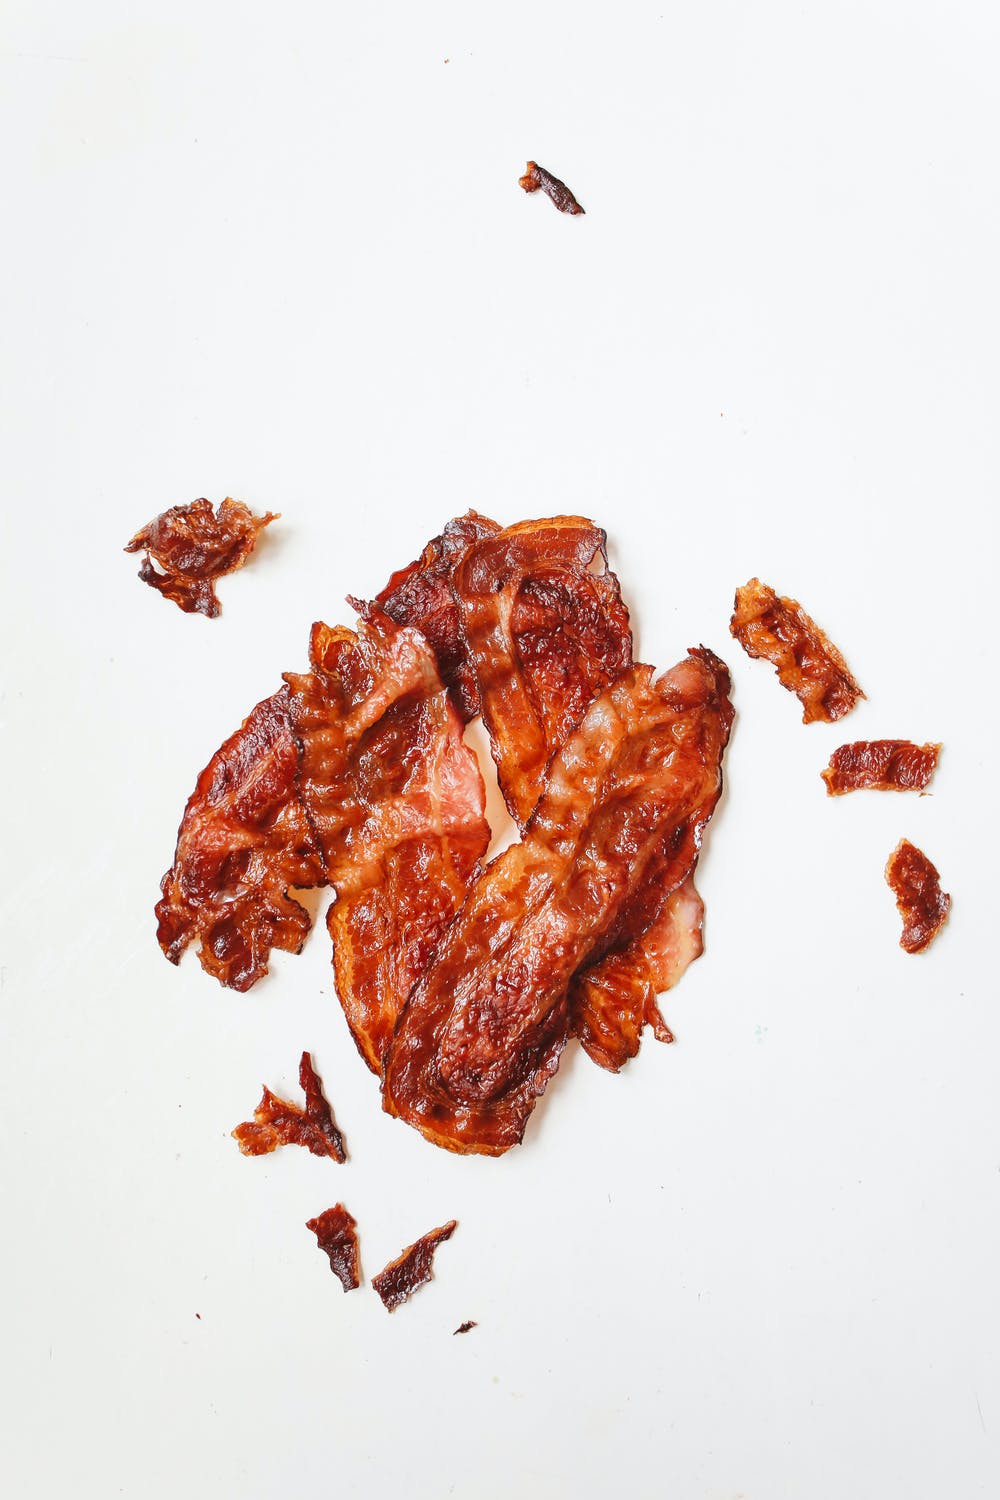 Microwave crispy bacon